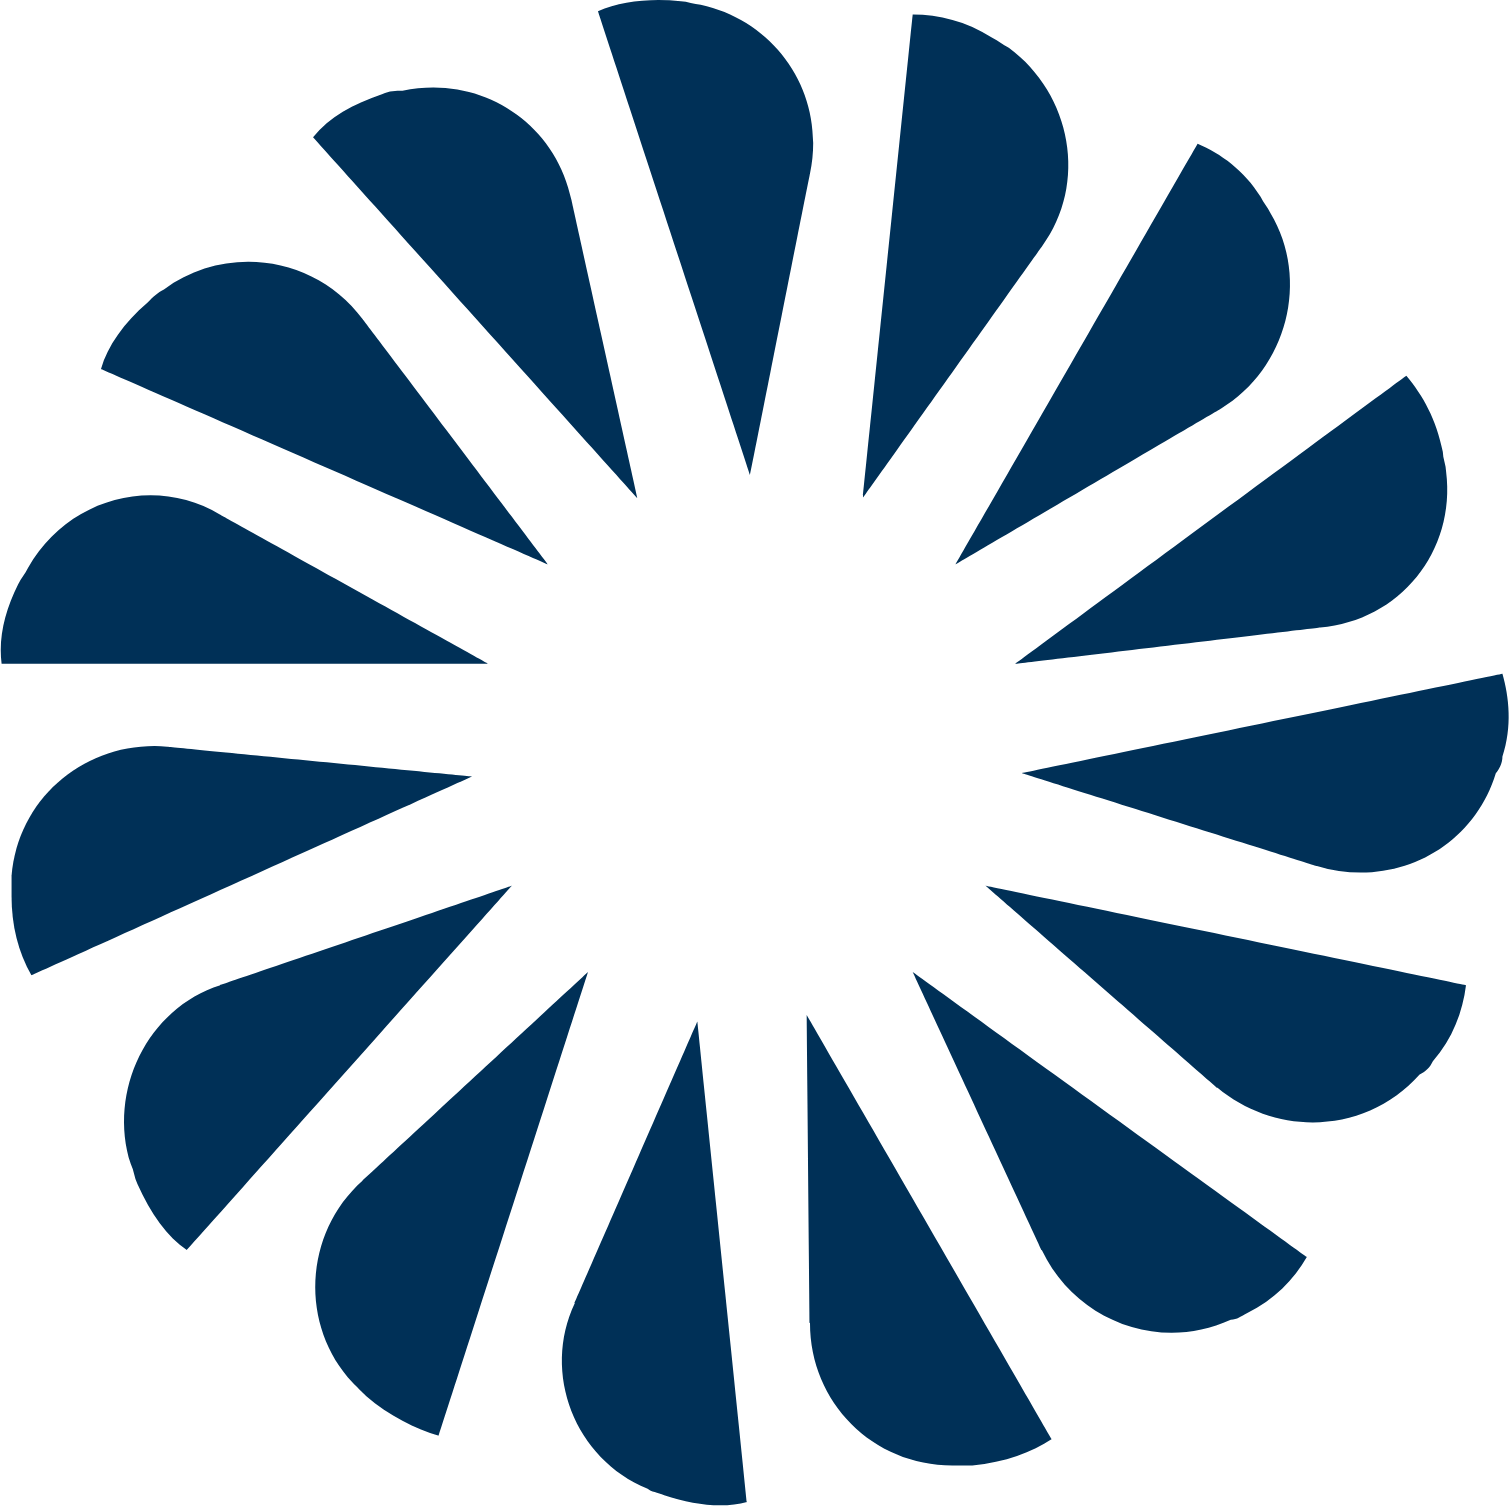 Cullen/Frost Bankers logo (transparent PNG)